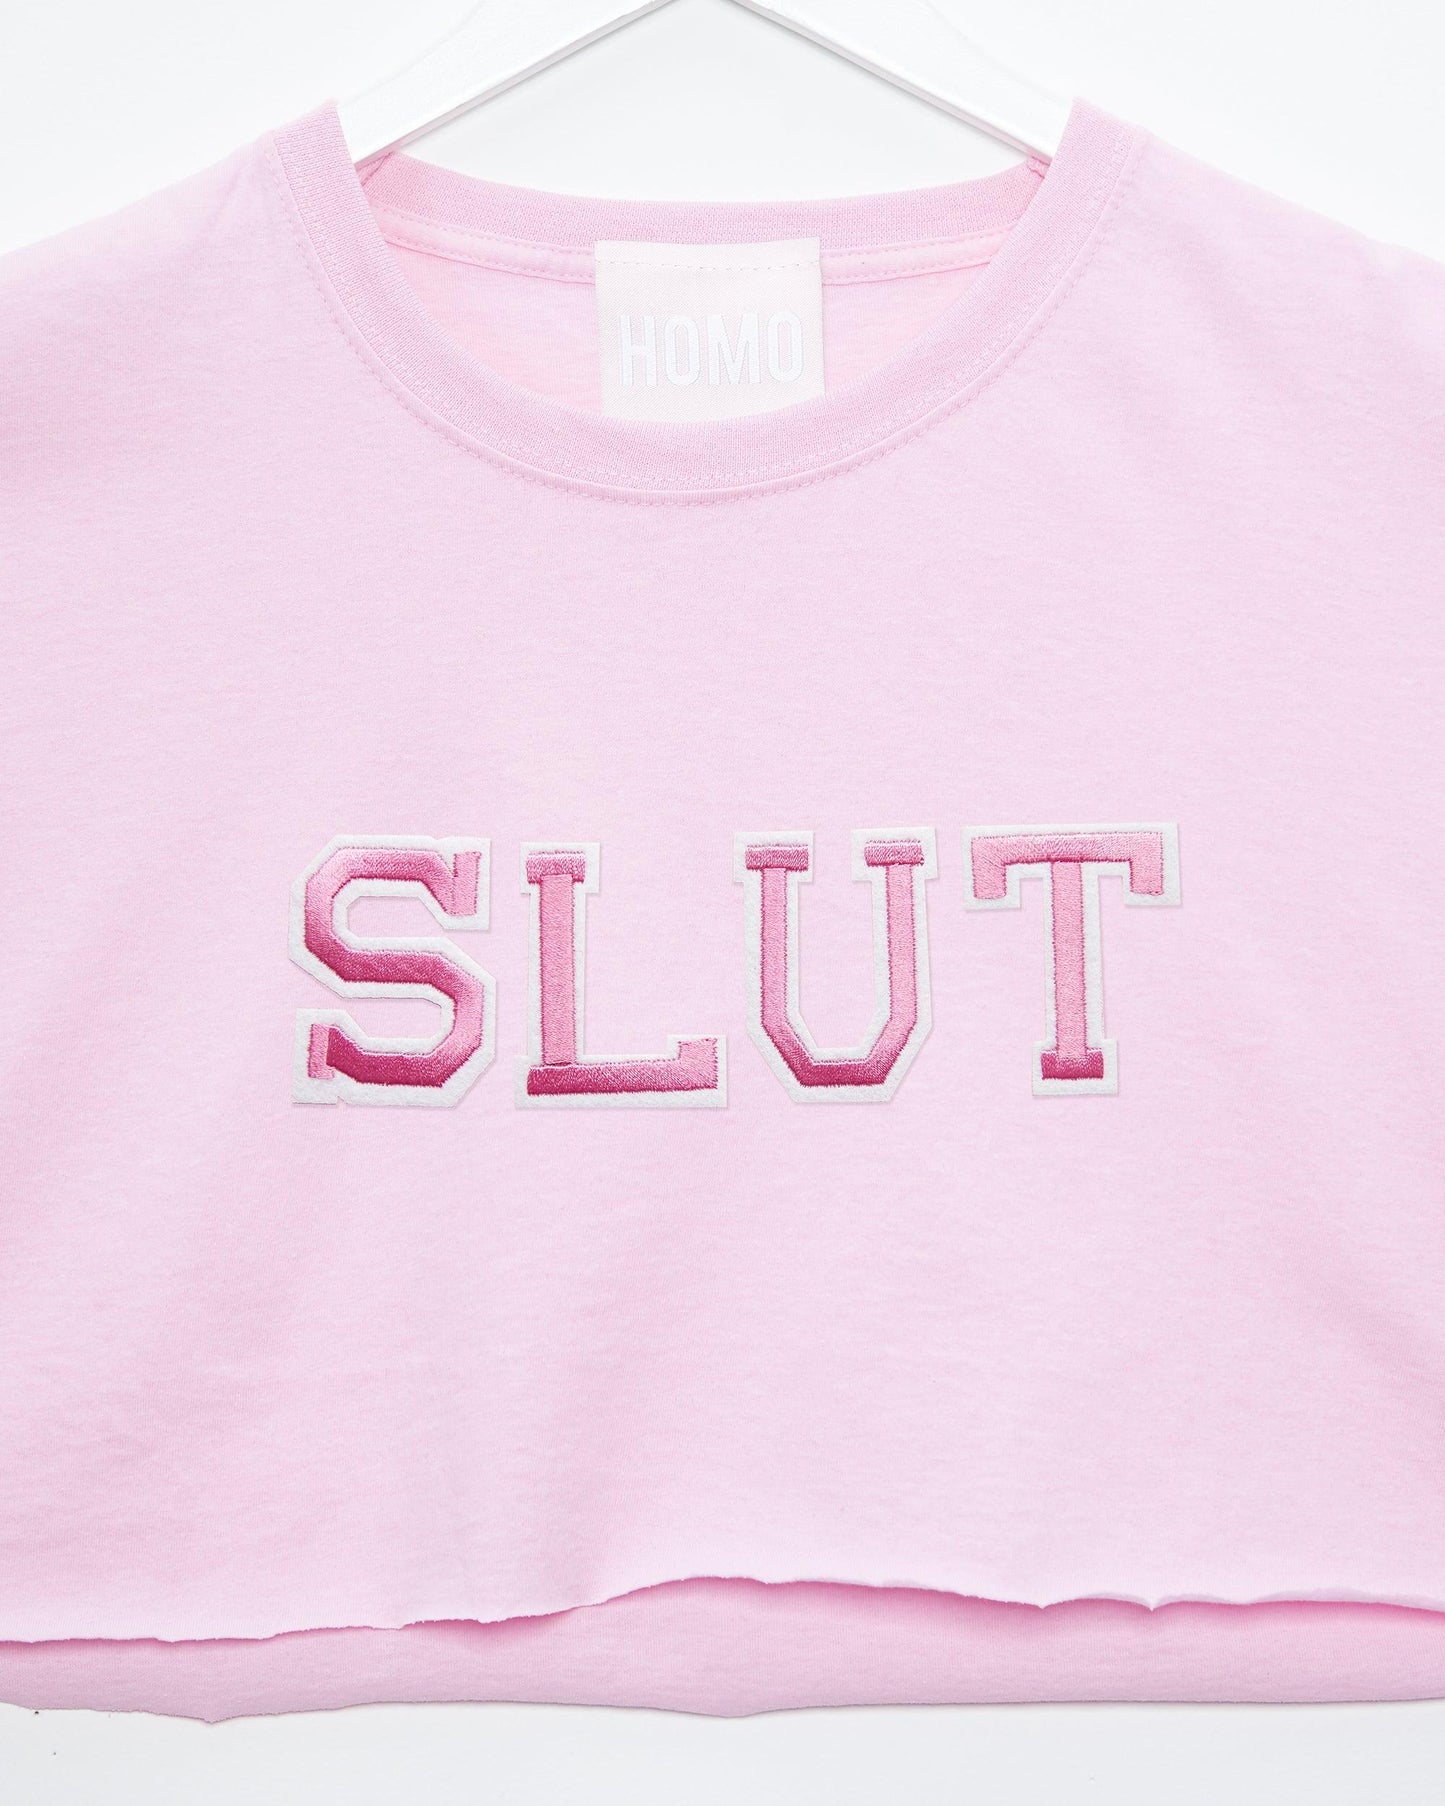 Varsity style slut embroidery on pink - mens crop top. - HOMOLONDON